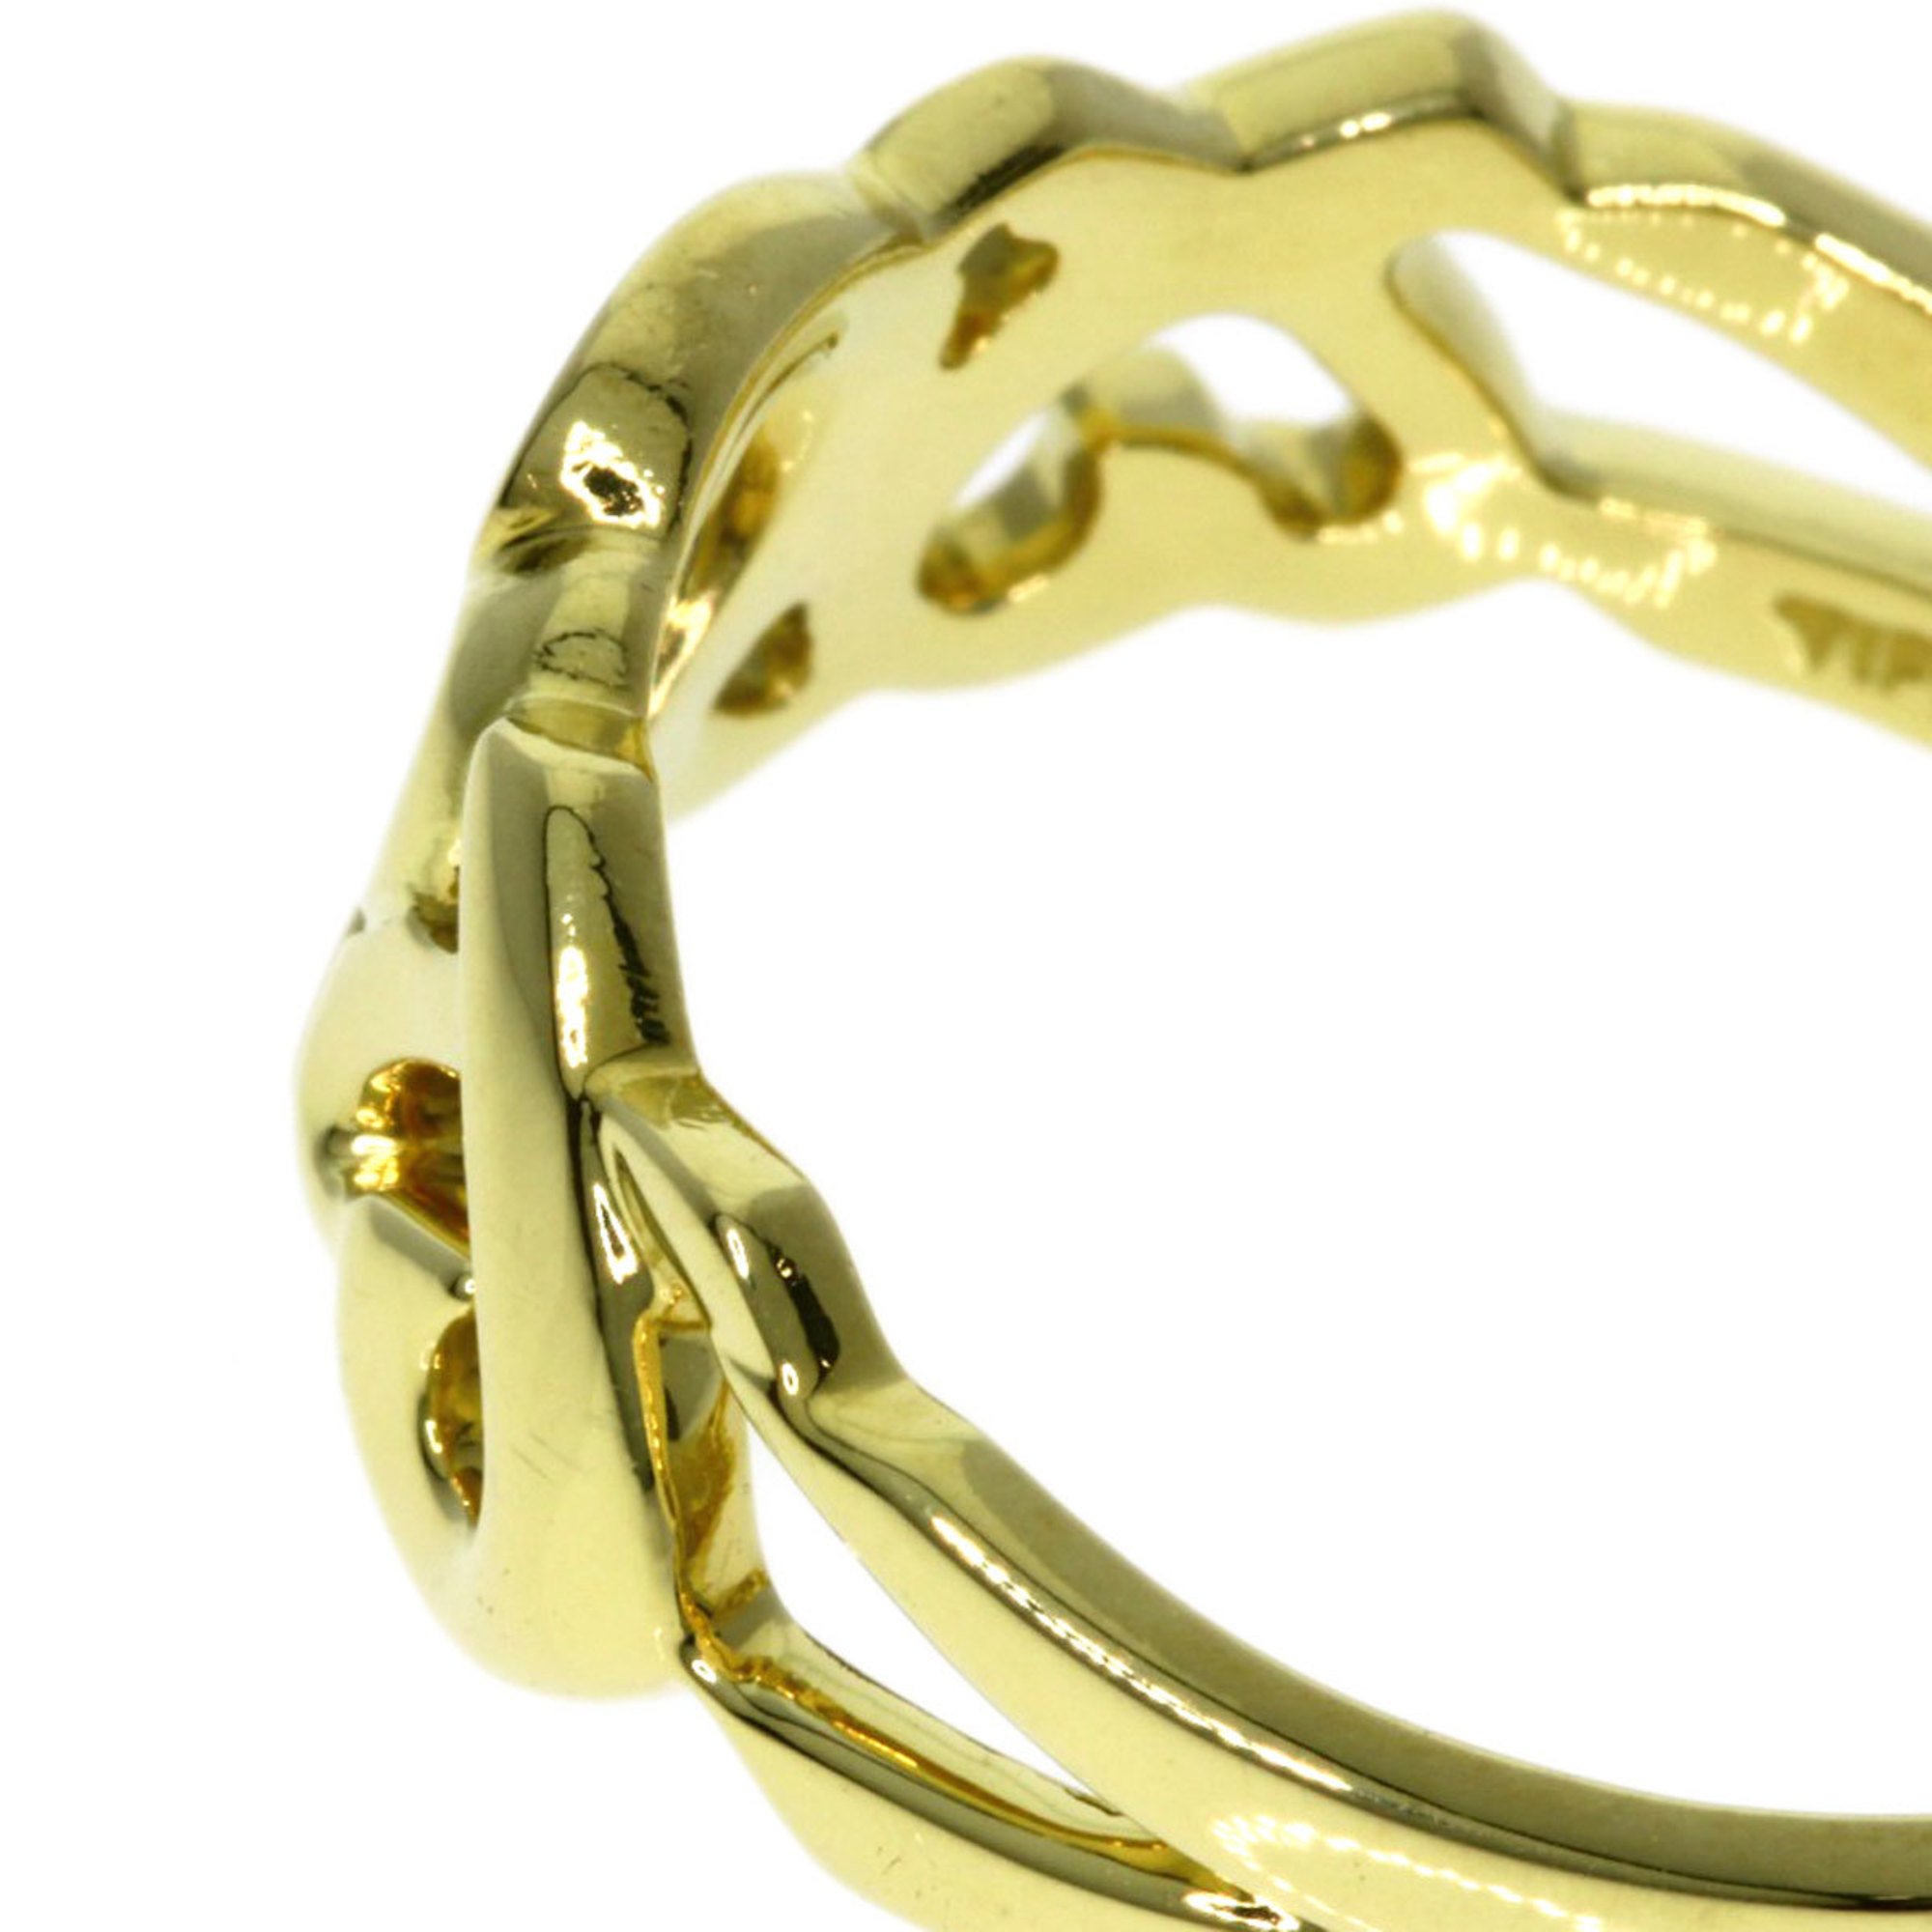 Tiffany & Co. Triple Loving Heart Ring, 18K Yellow Gold, Women's, TIFFANY